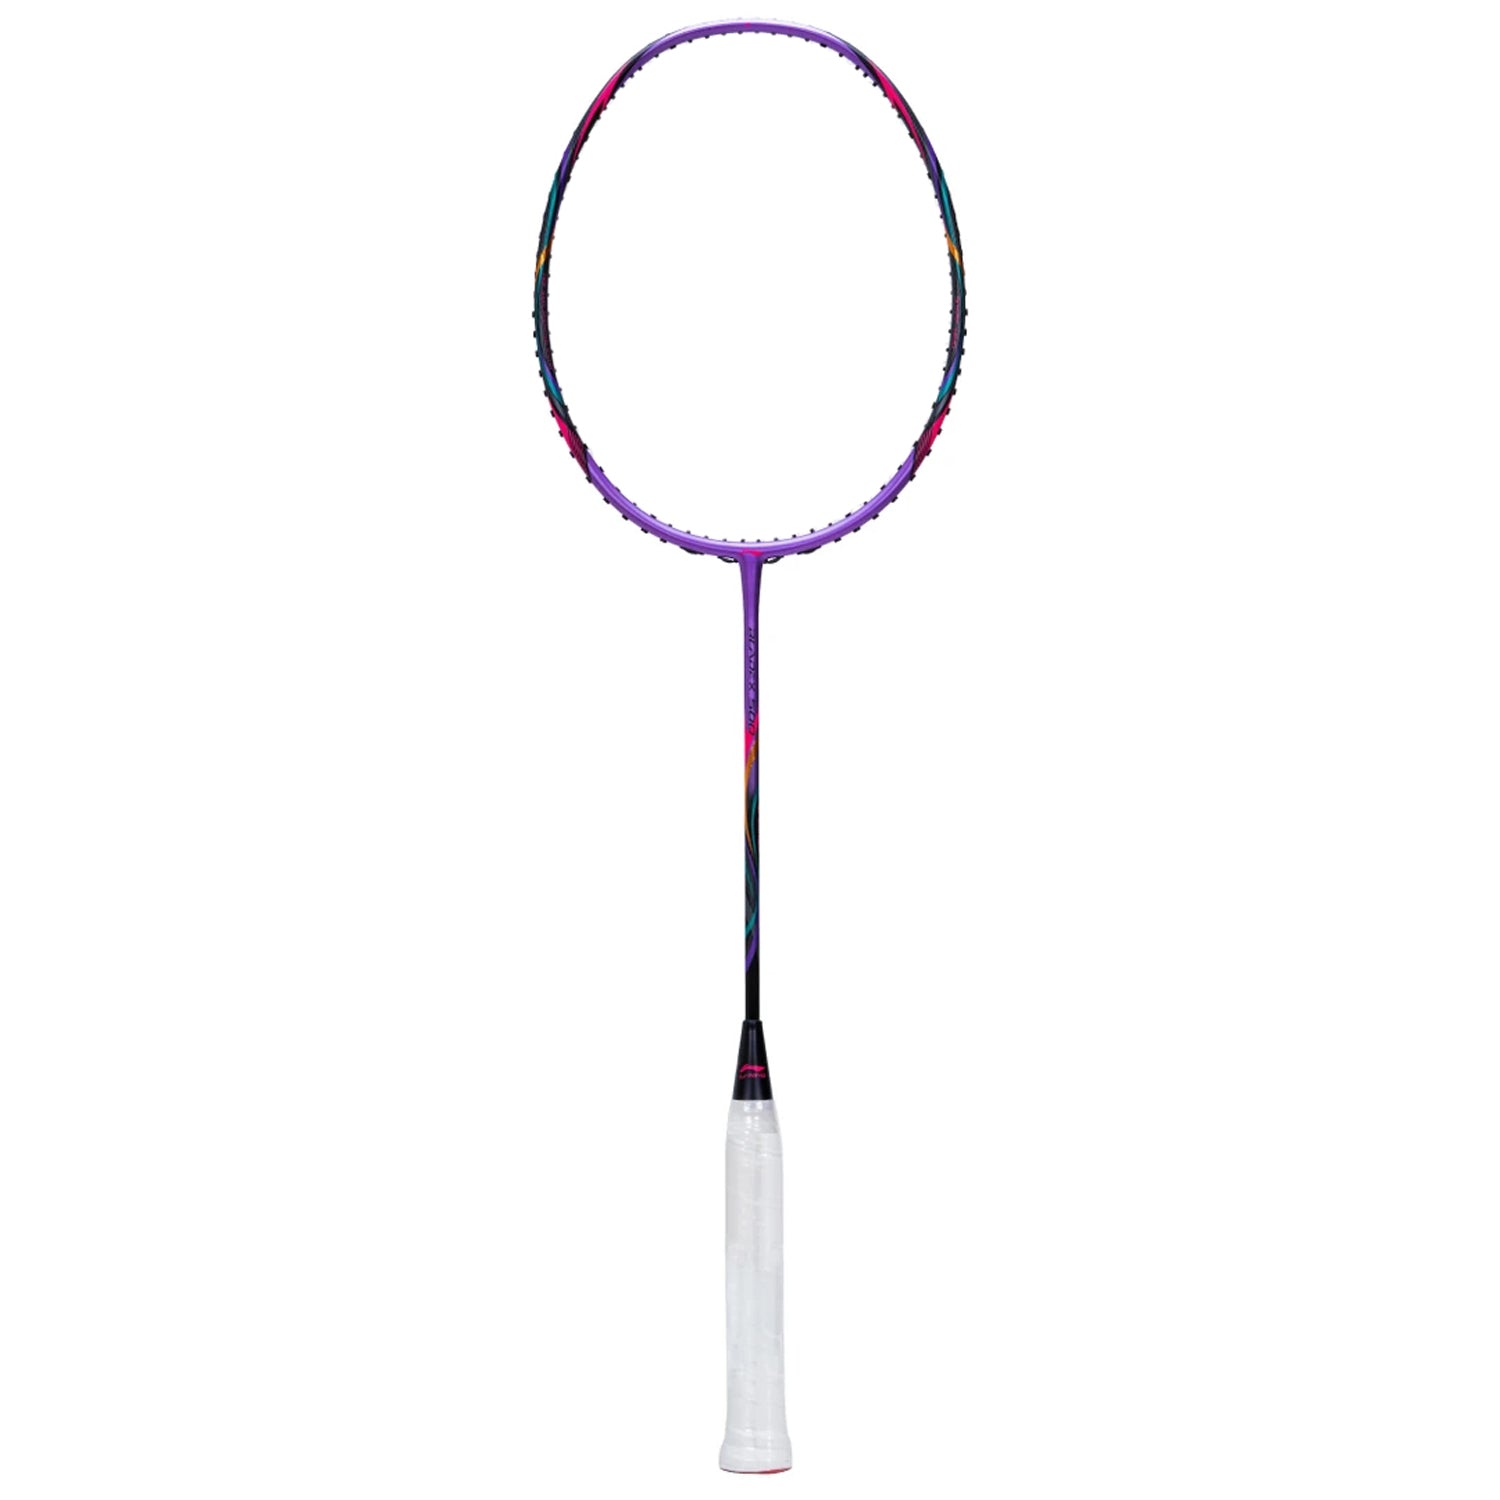 Li-Ning Bladex 500 Unstrung Badminton Racquet, Purple/Black - Best Price online Prokicksports.com